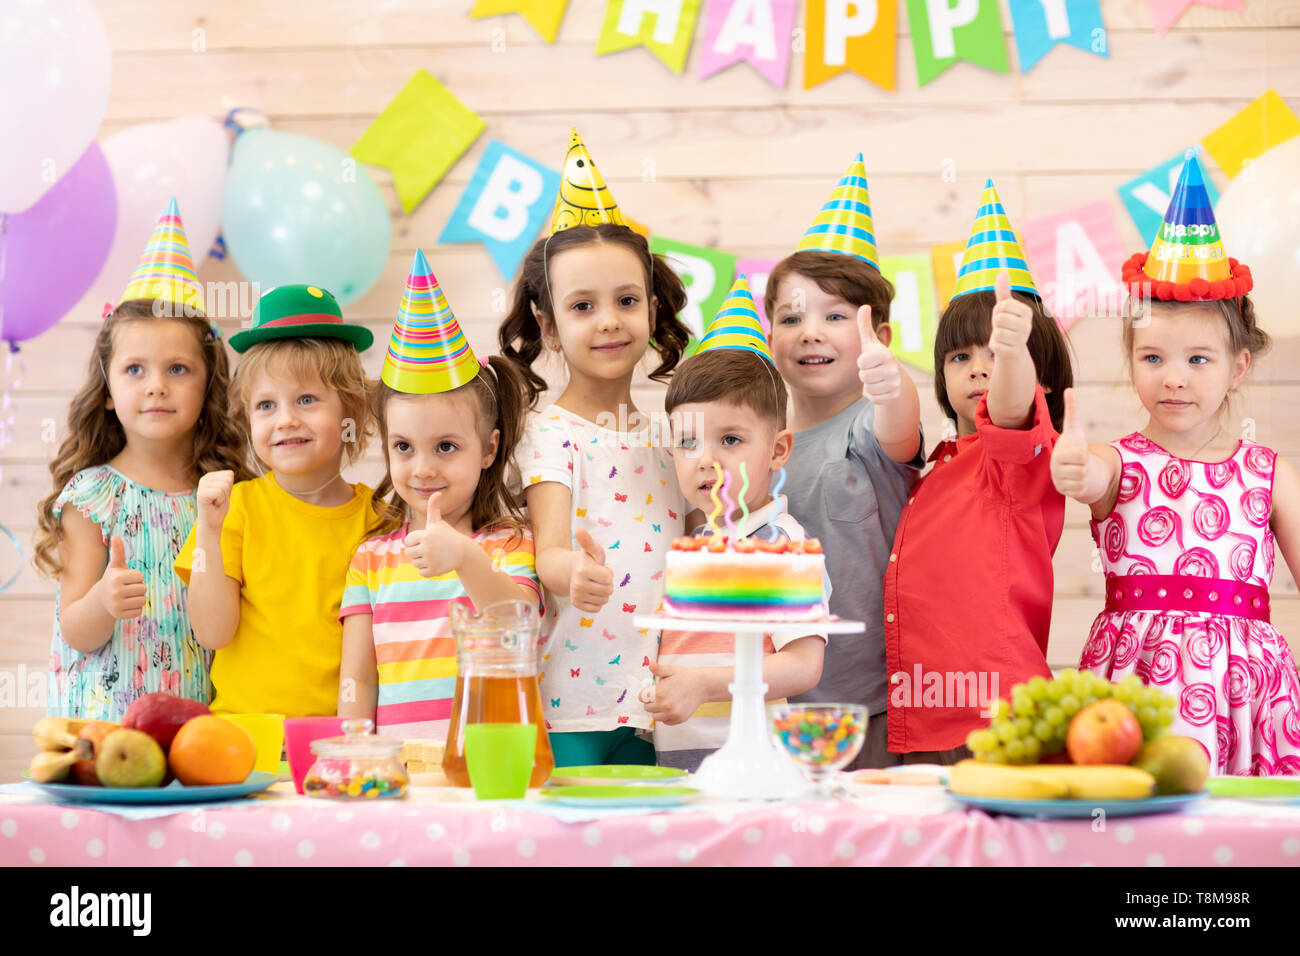 Group Of Preschool Children Having Fun Celebrating Birthday Party